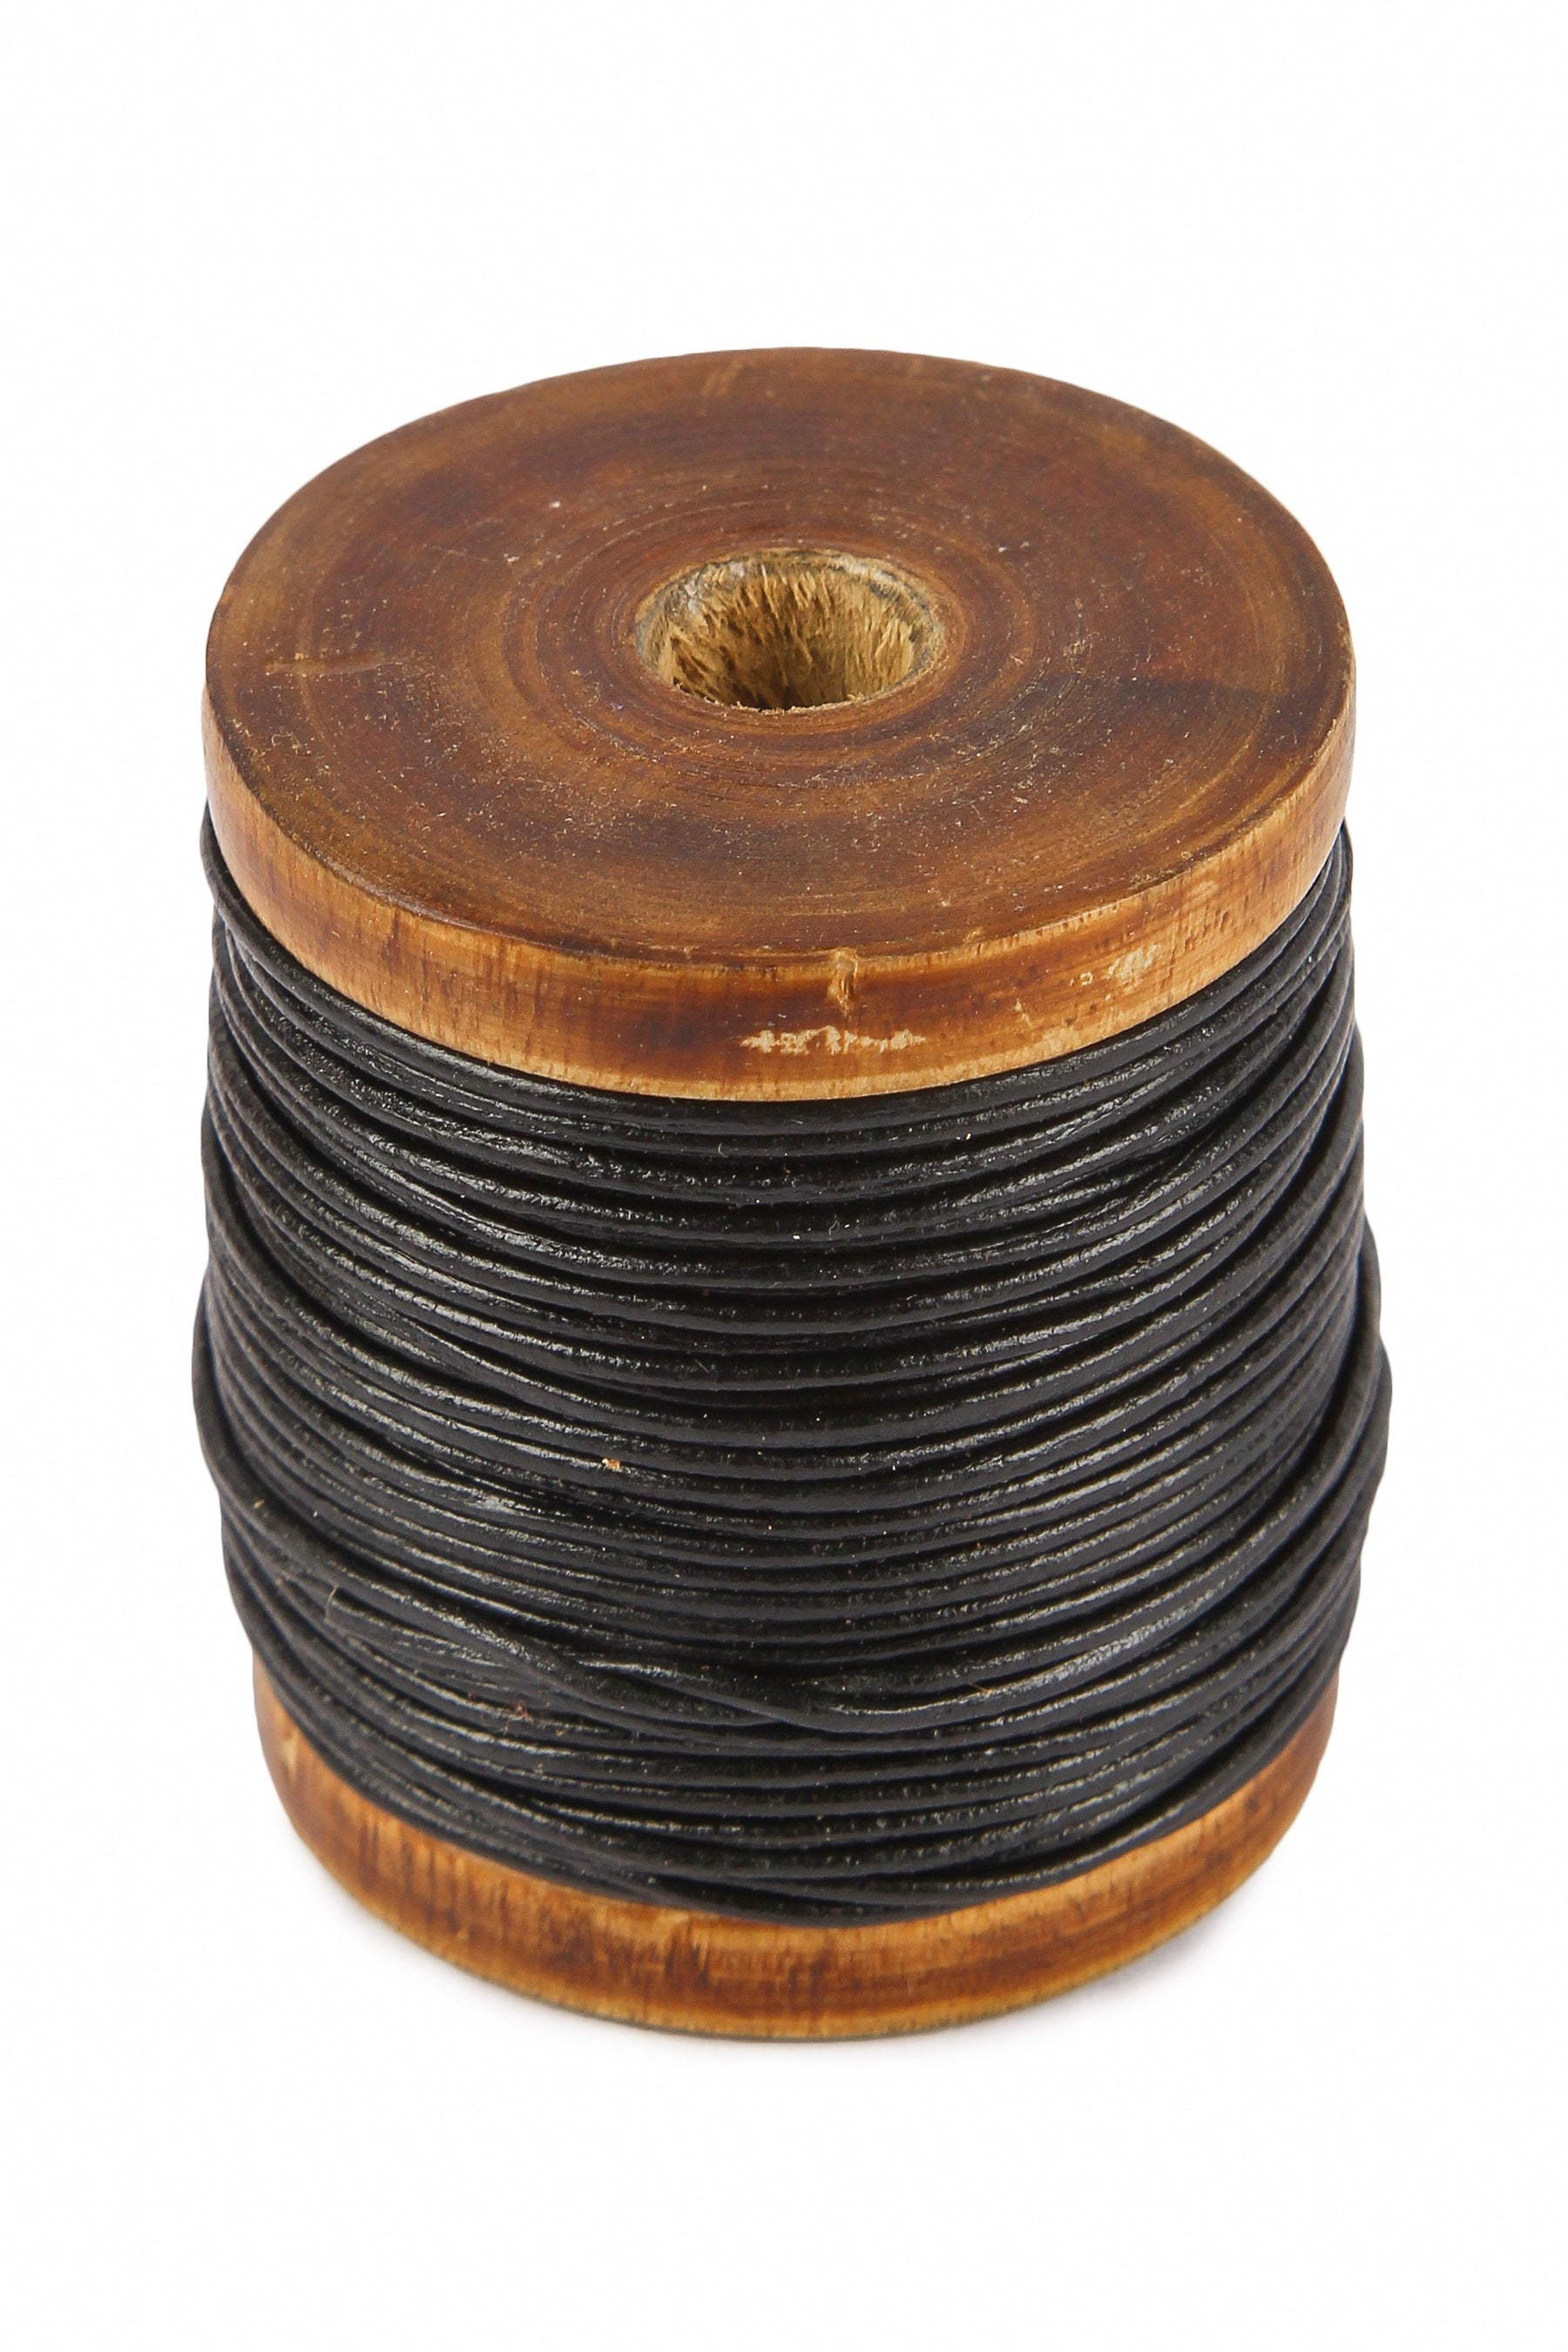 Leather string black, 1mm, 20m